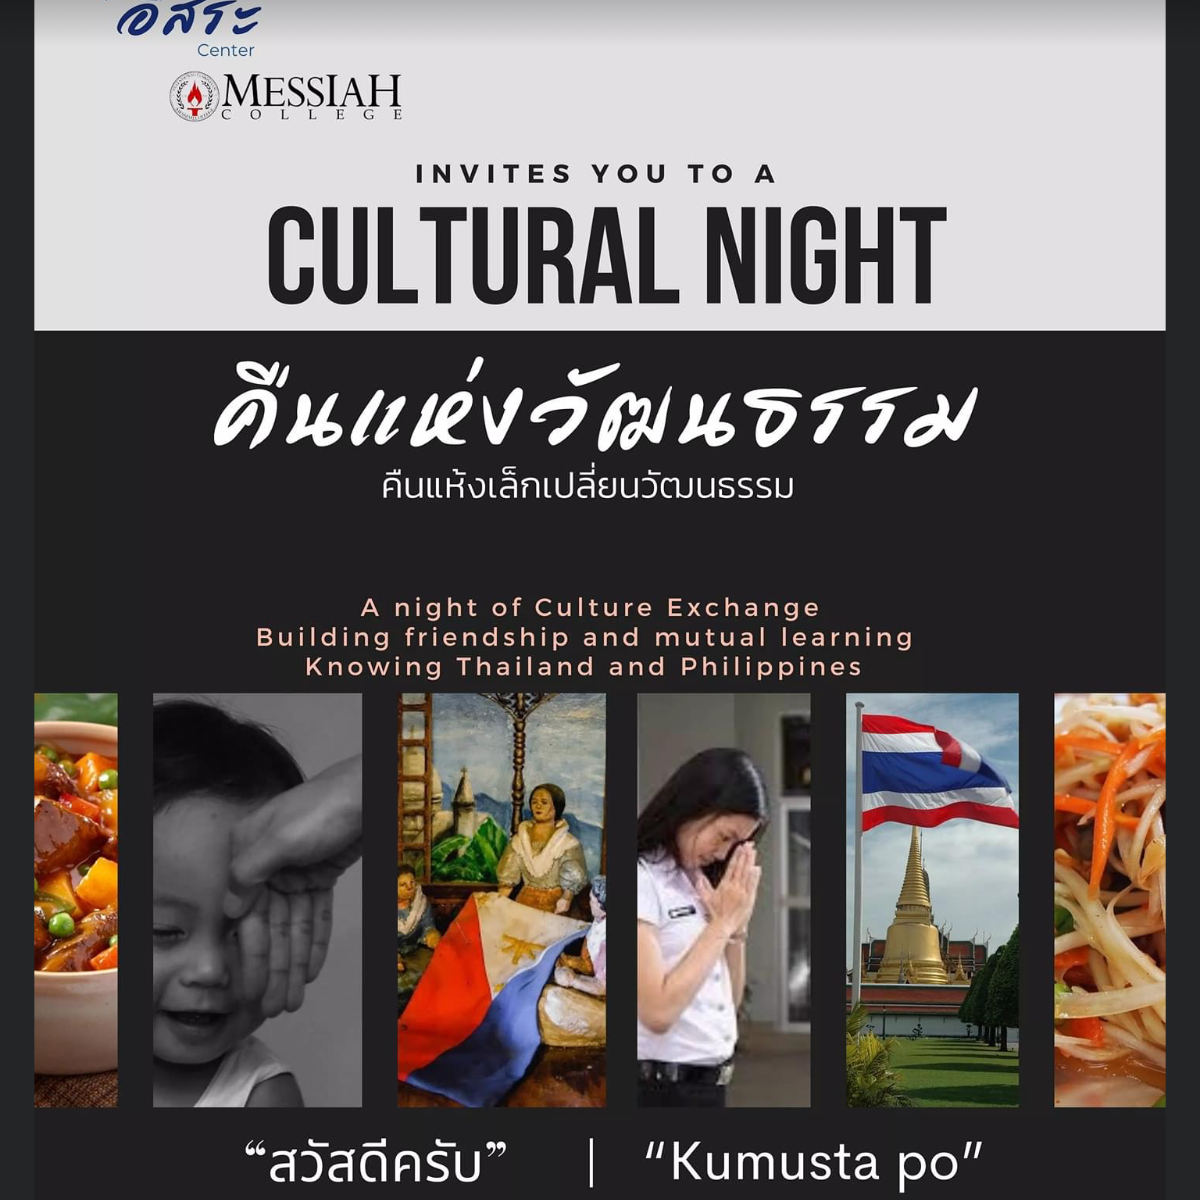 Flyer for a cultural exchange